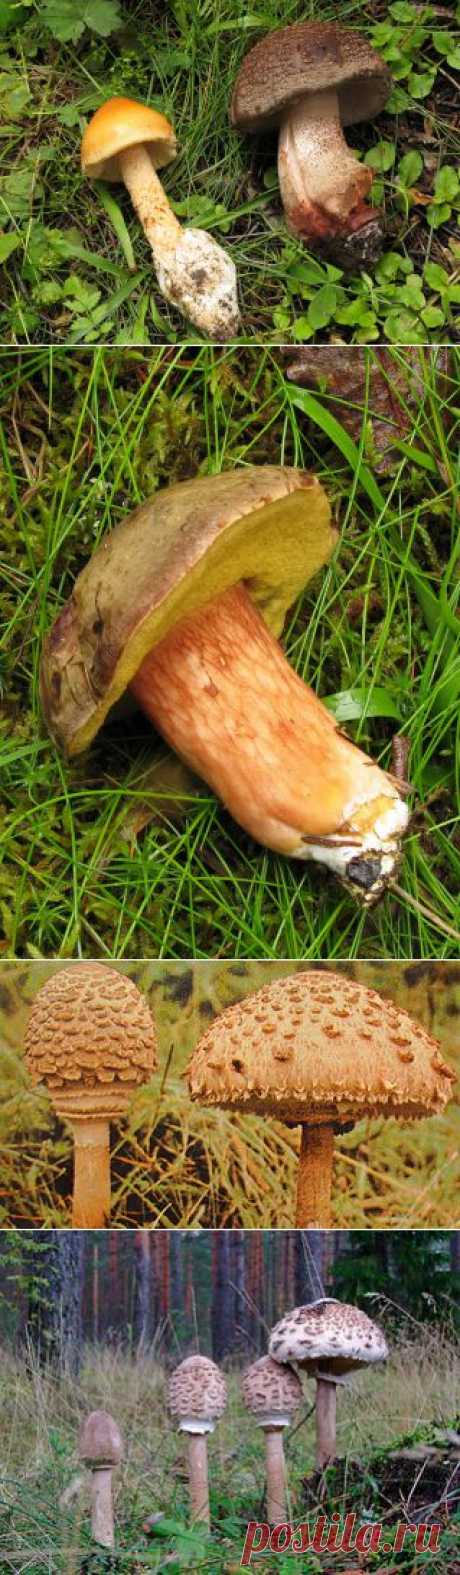 Landgraf : справочник грибника : Охота за грибами